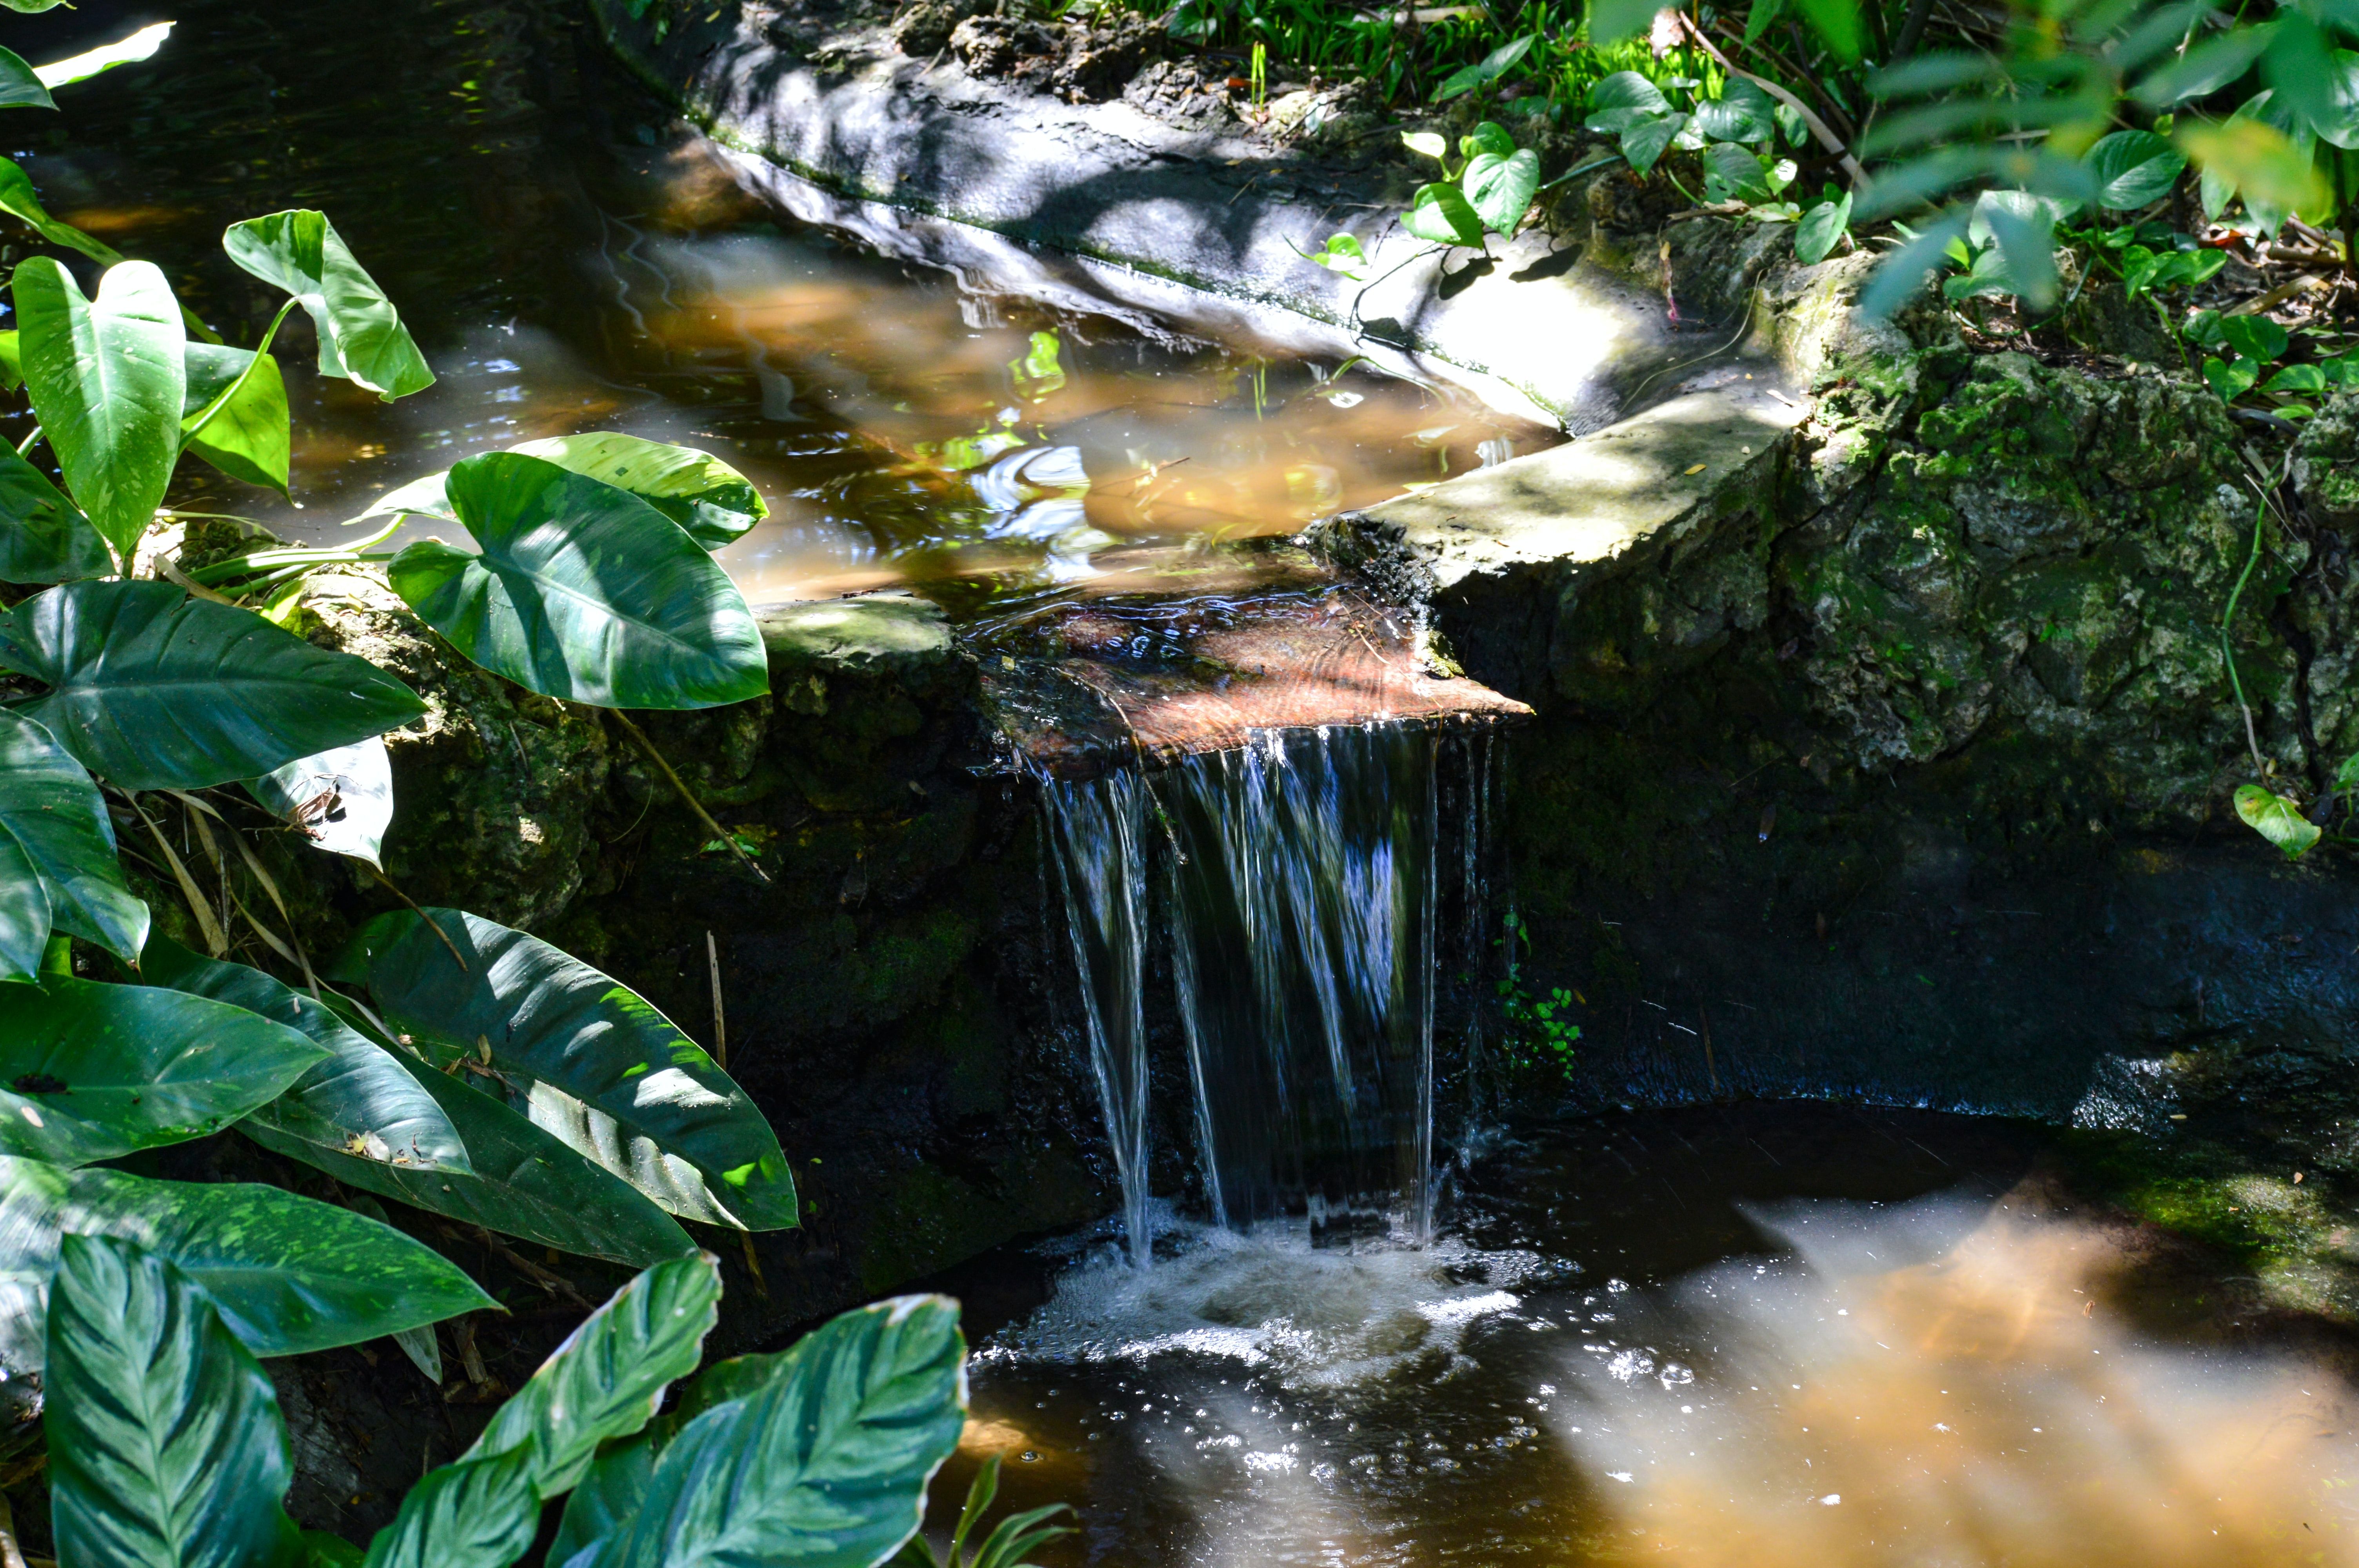 Waterfall in Sunken Gardens Botanical Garden in St. Petersburg, Florida